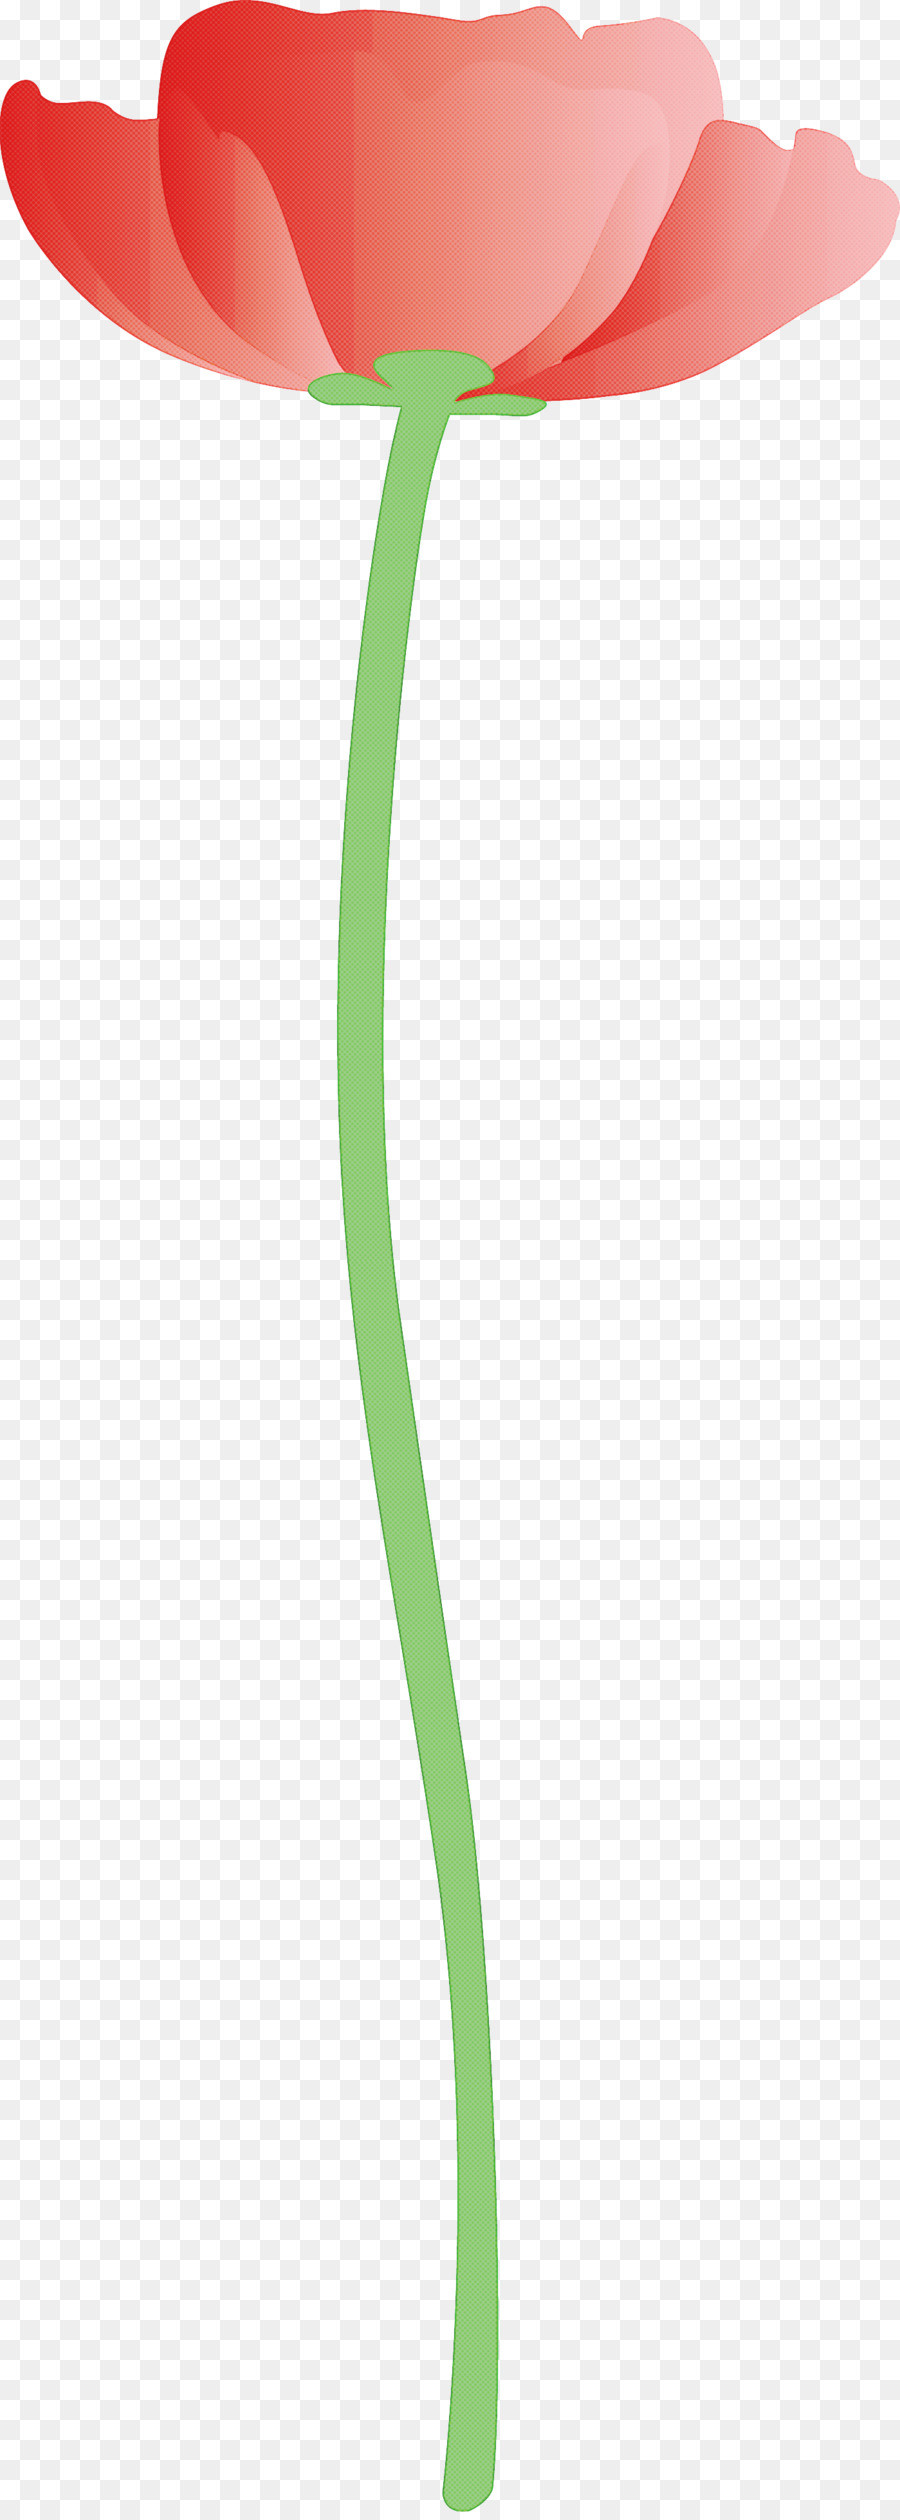 linea verde pianta a foglia - 